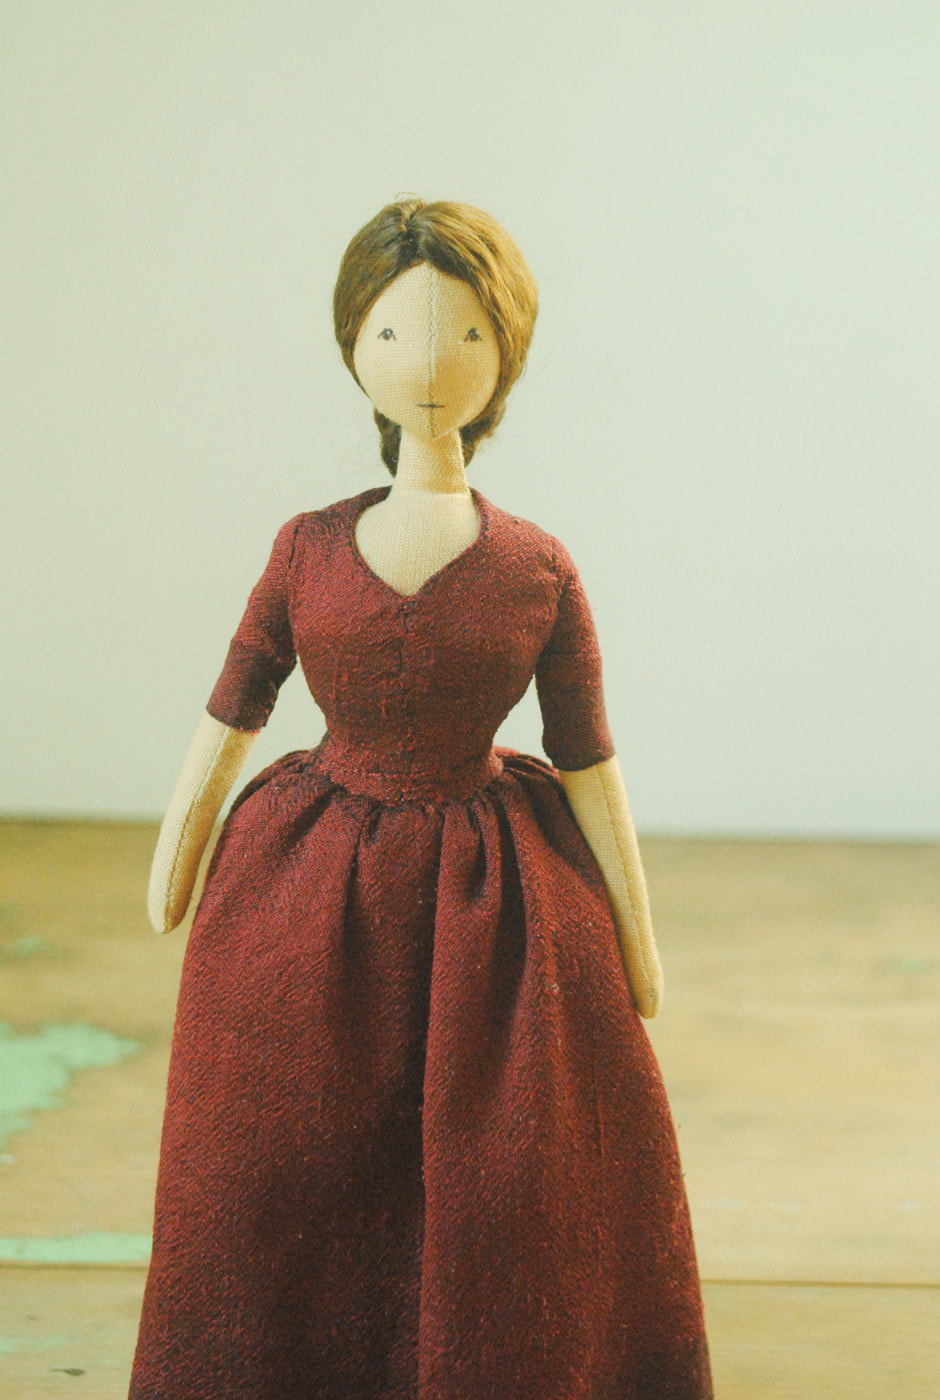 Willowynn doll by Margeaux Davis